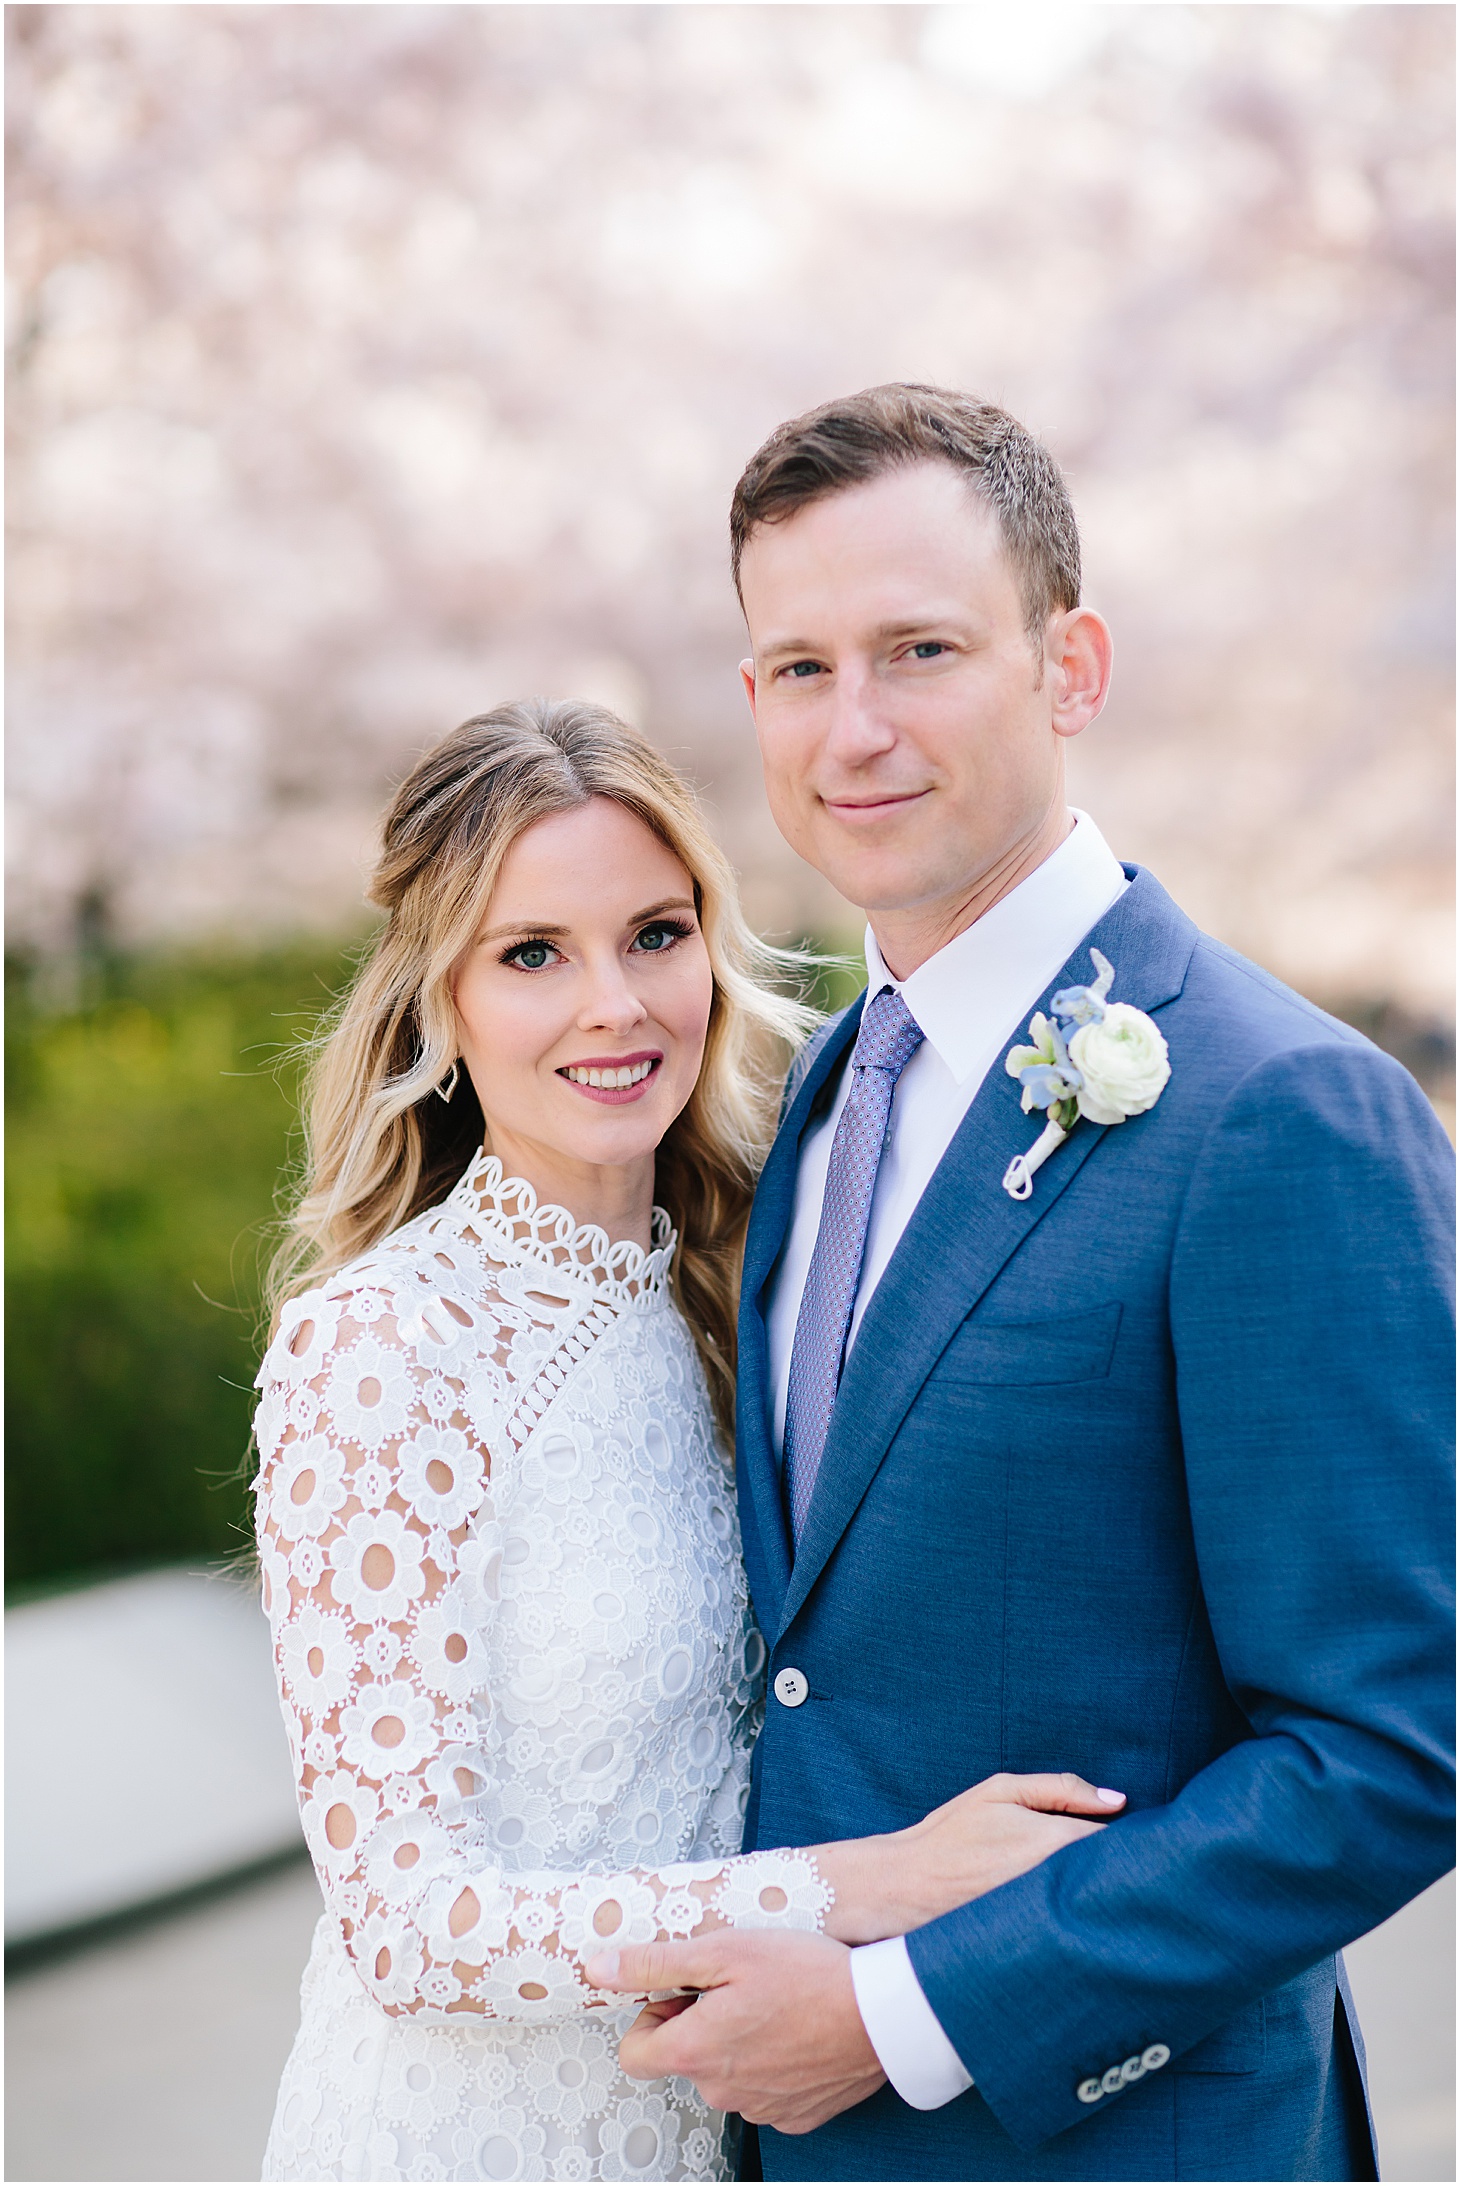 Wedding Portraits at Tidal Basin, Cherry Blossom Elopement in Washington DC, Sarah Bradshaw Photography